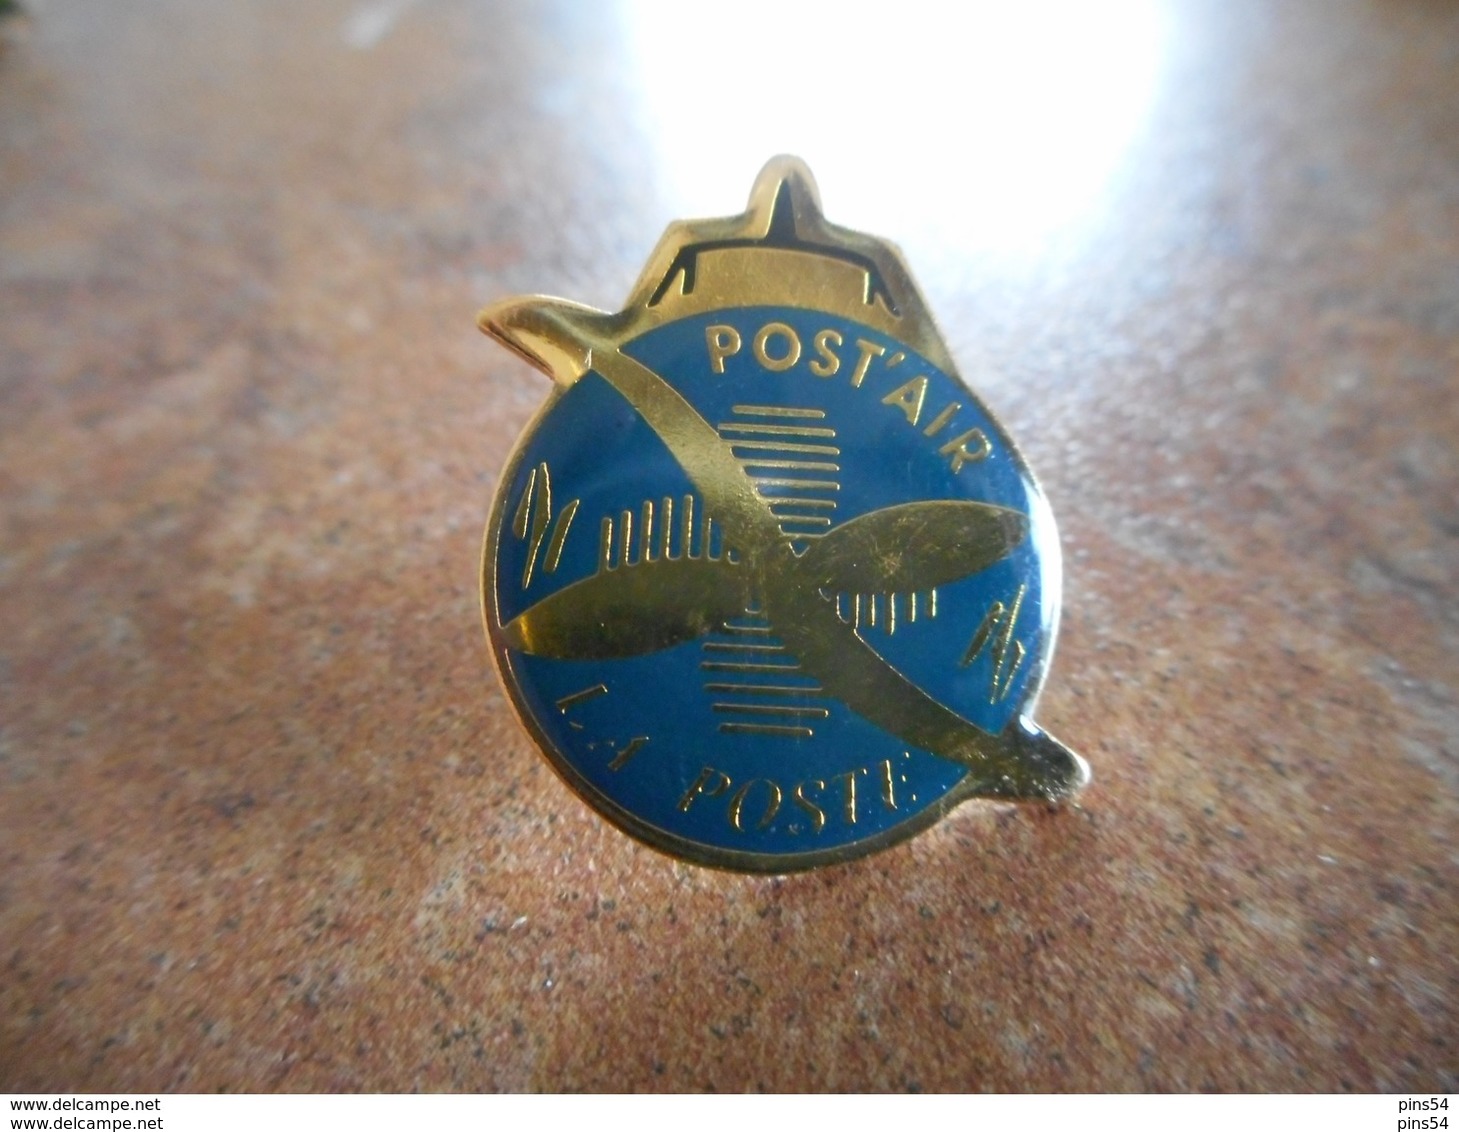 A021 -- Pin's La Poste Post Air - Postes